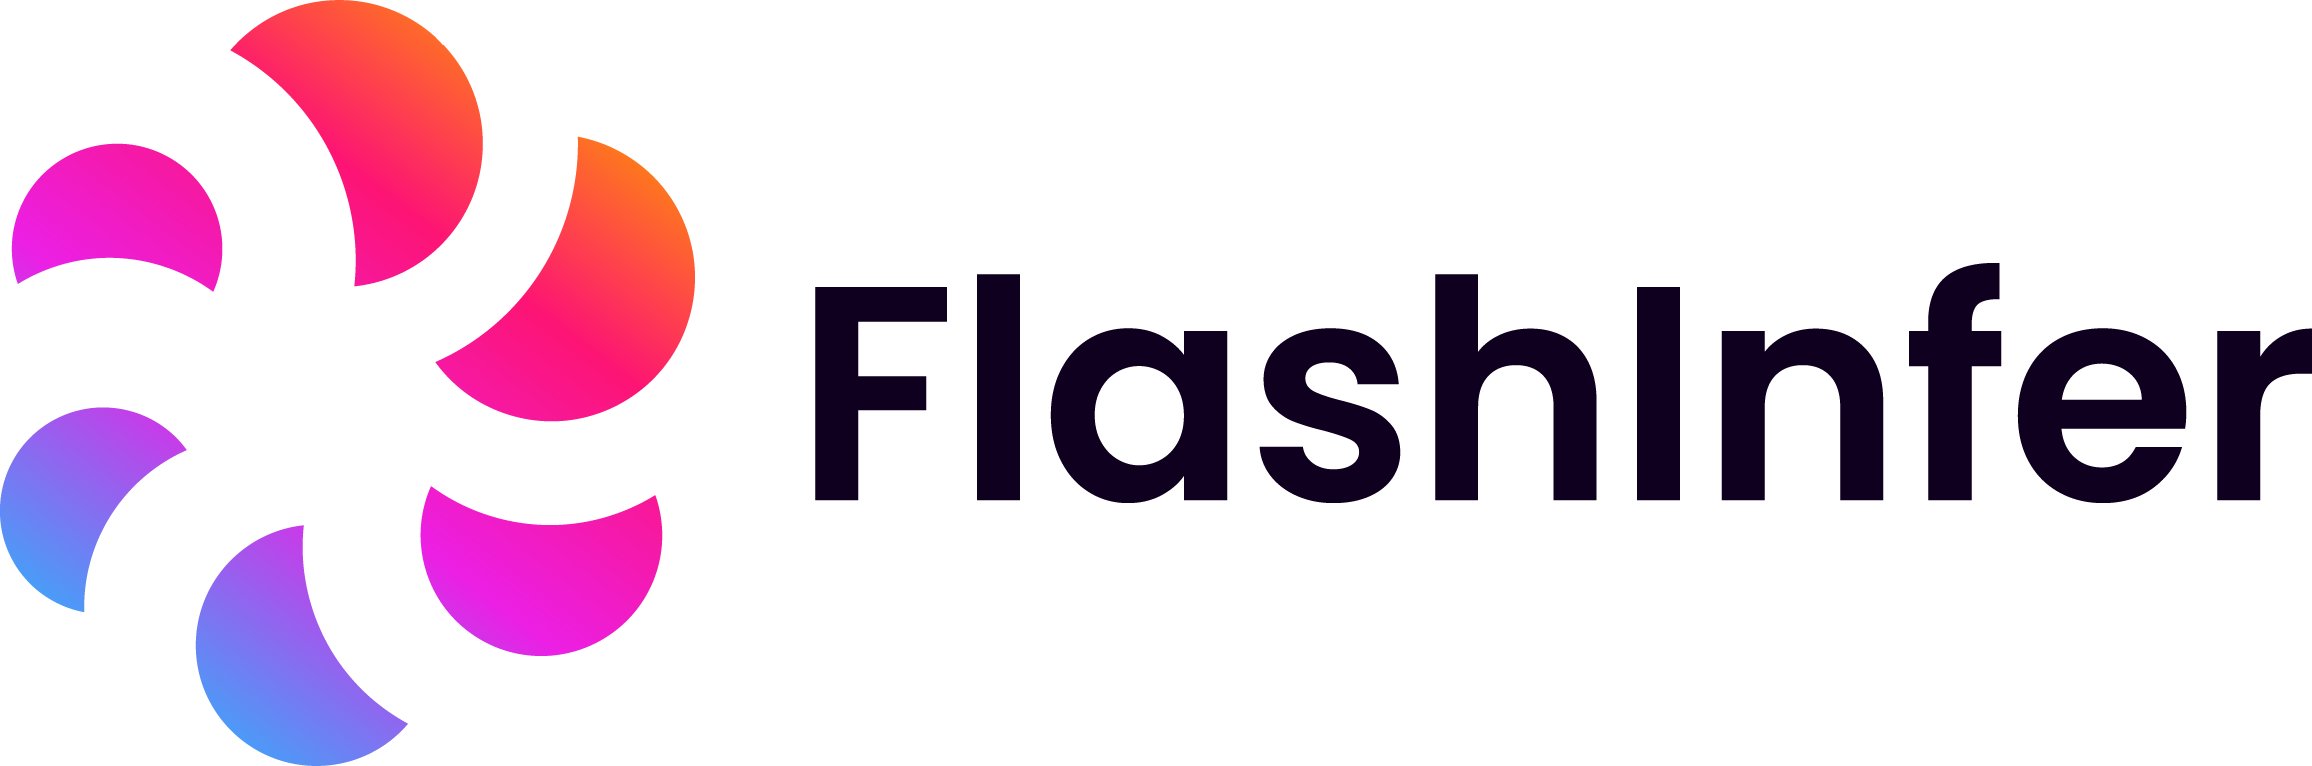 flashinfer-logo